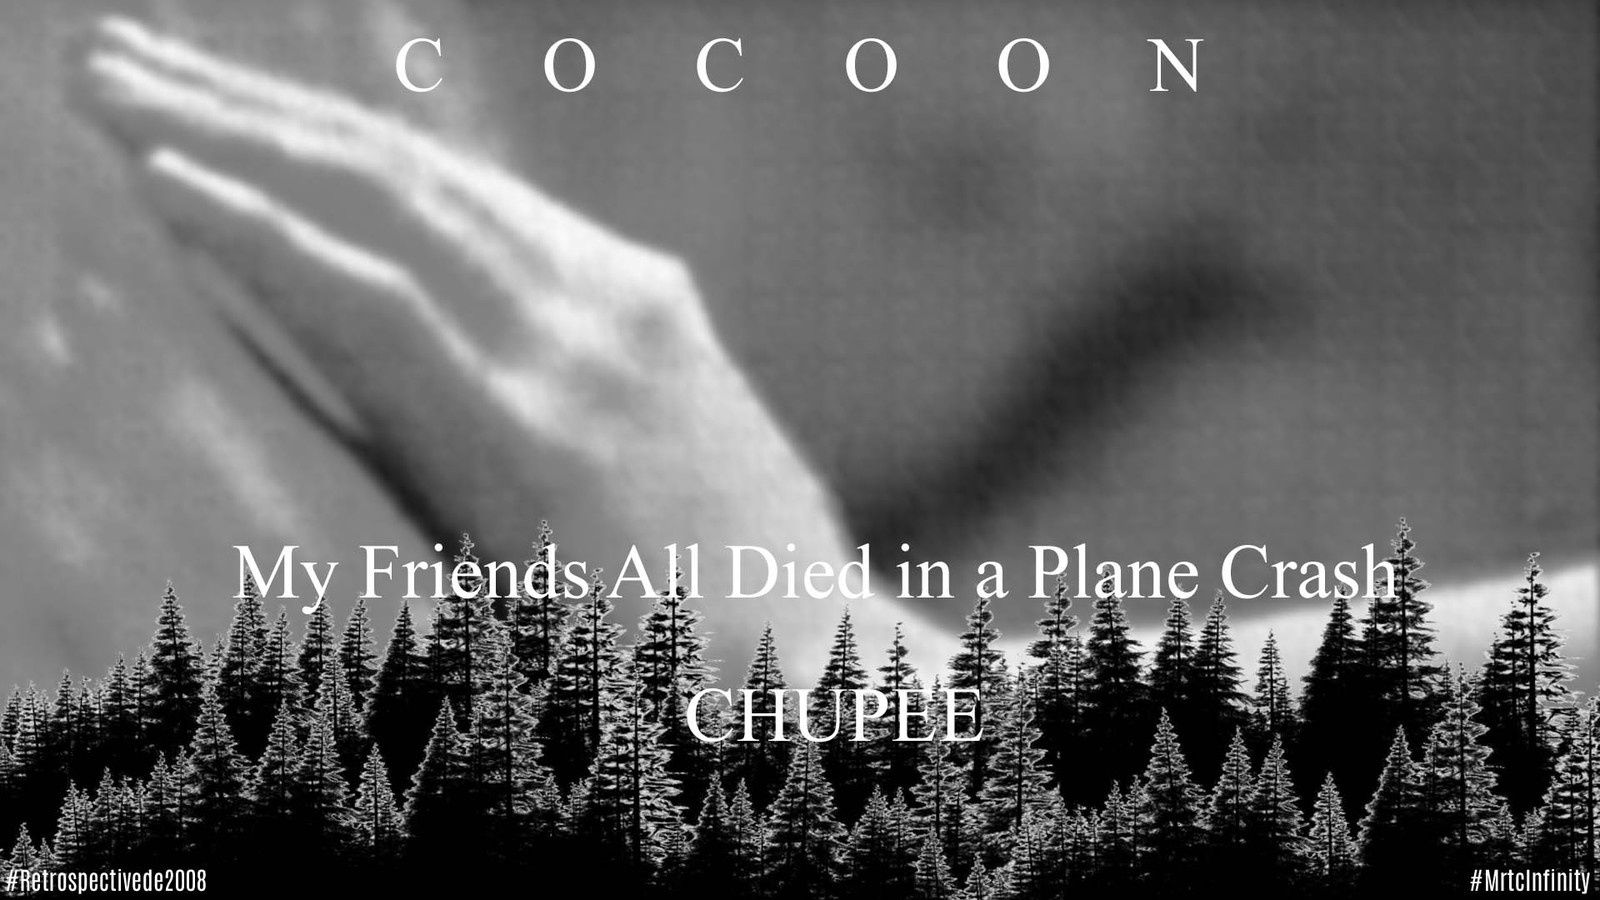 Cocoon - Chupee - M.R.T.C INFINITY